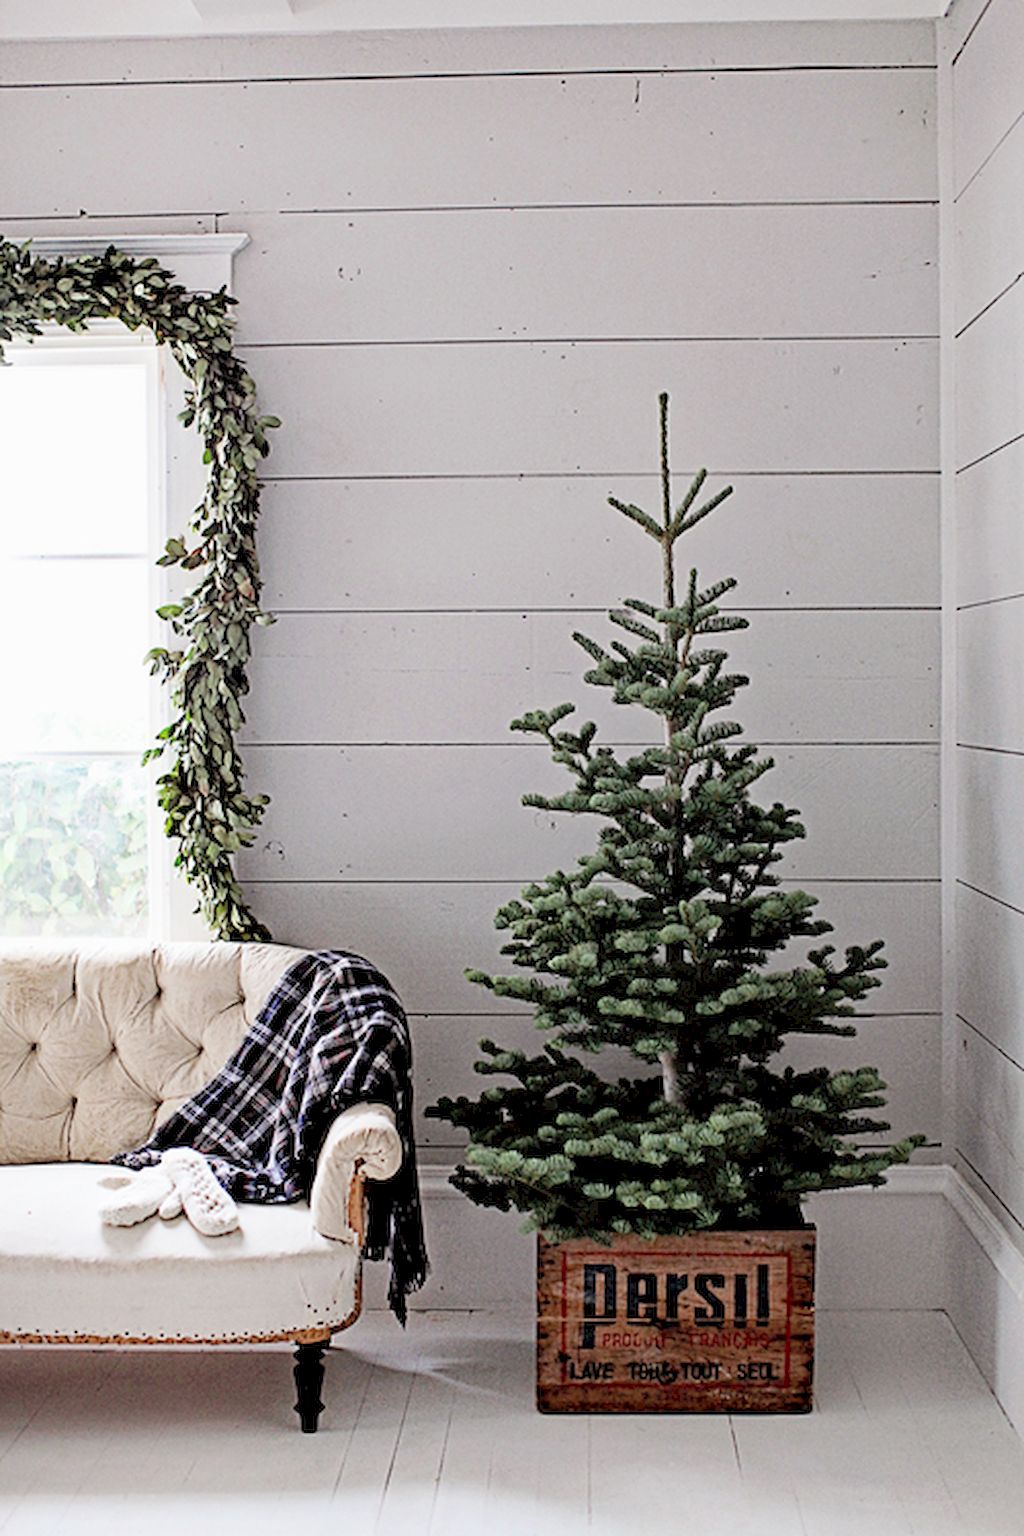 10 Ways to Decorate Your Christmas Tree - Bare Christmas Tree